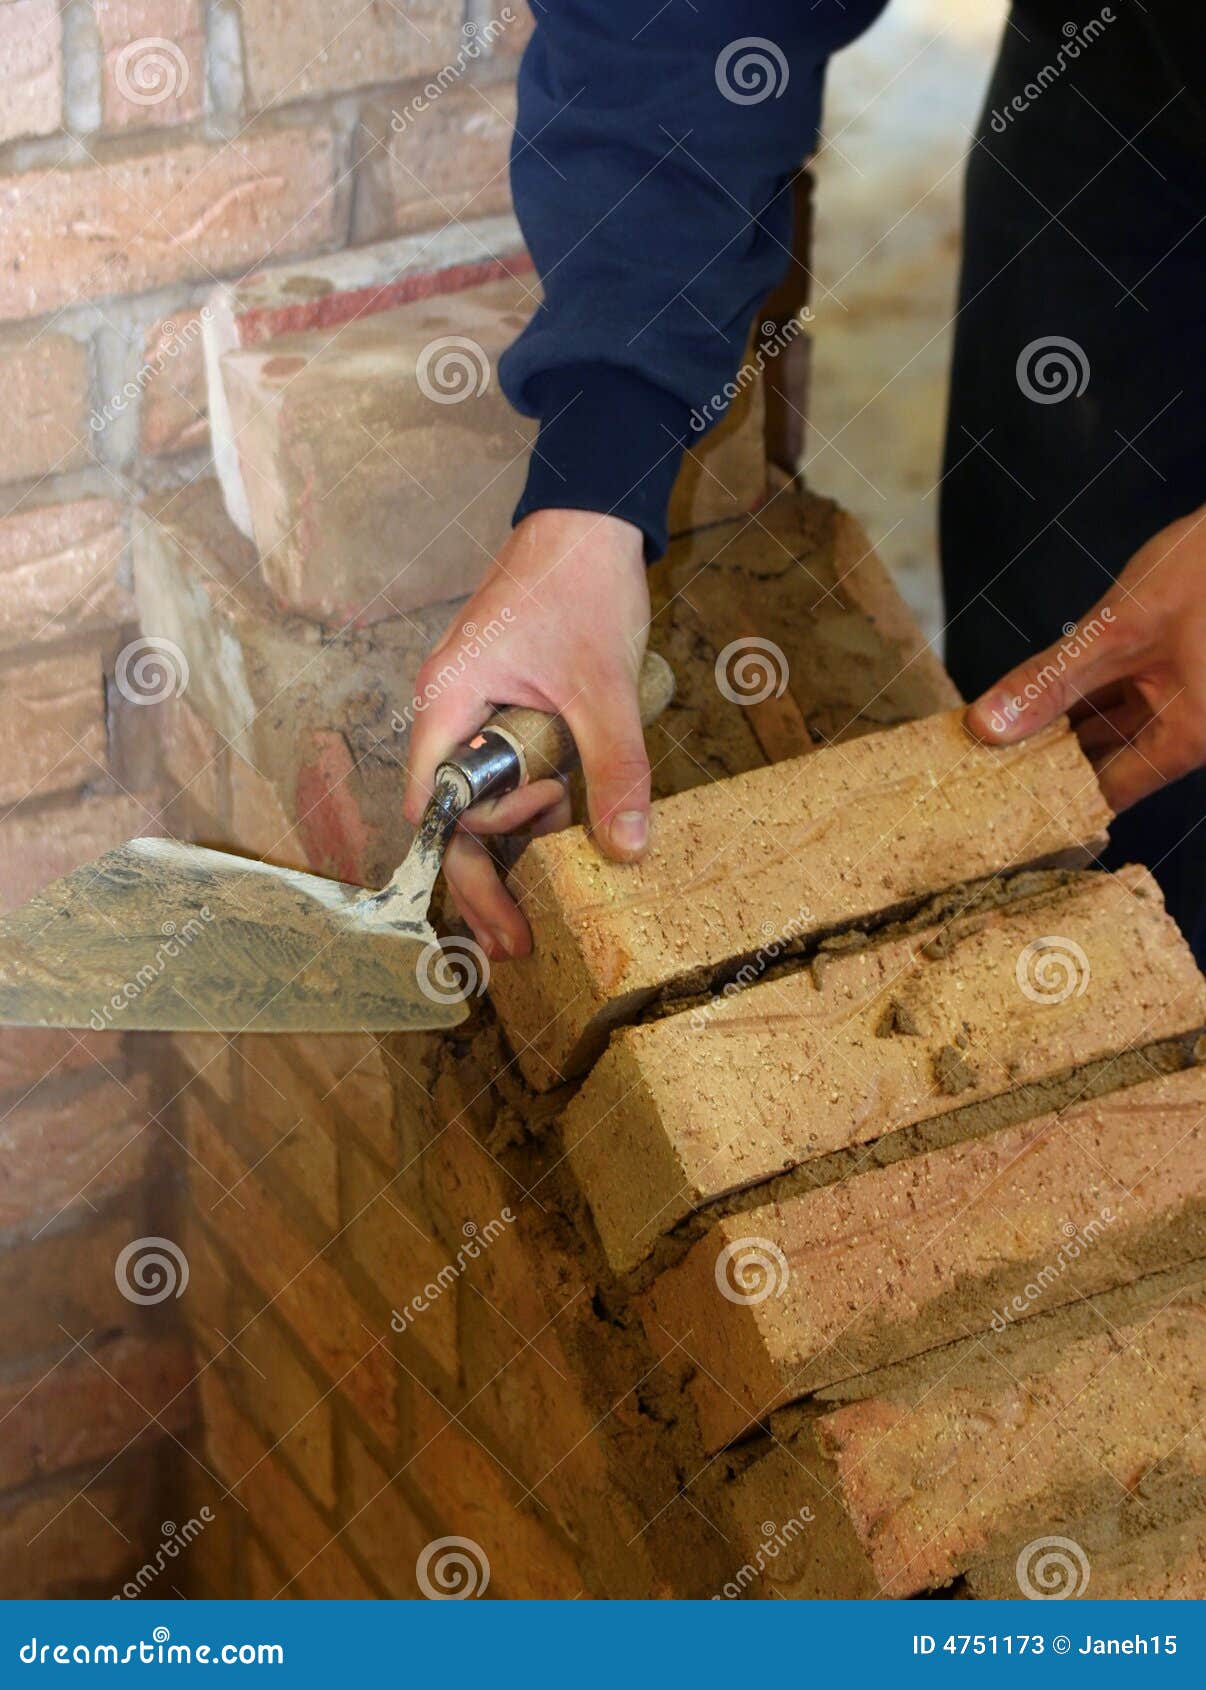 trainee bricklayer